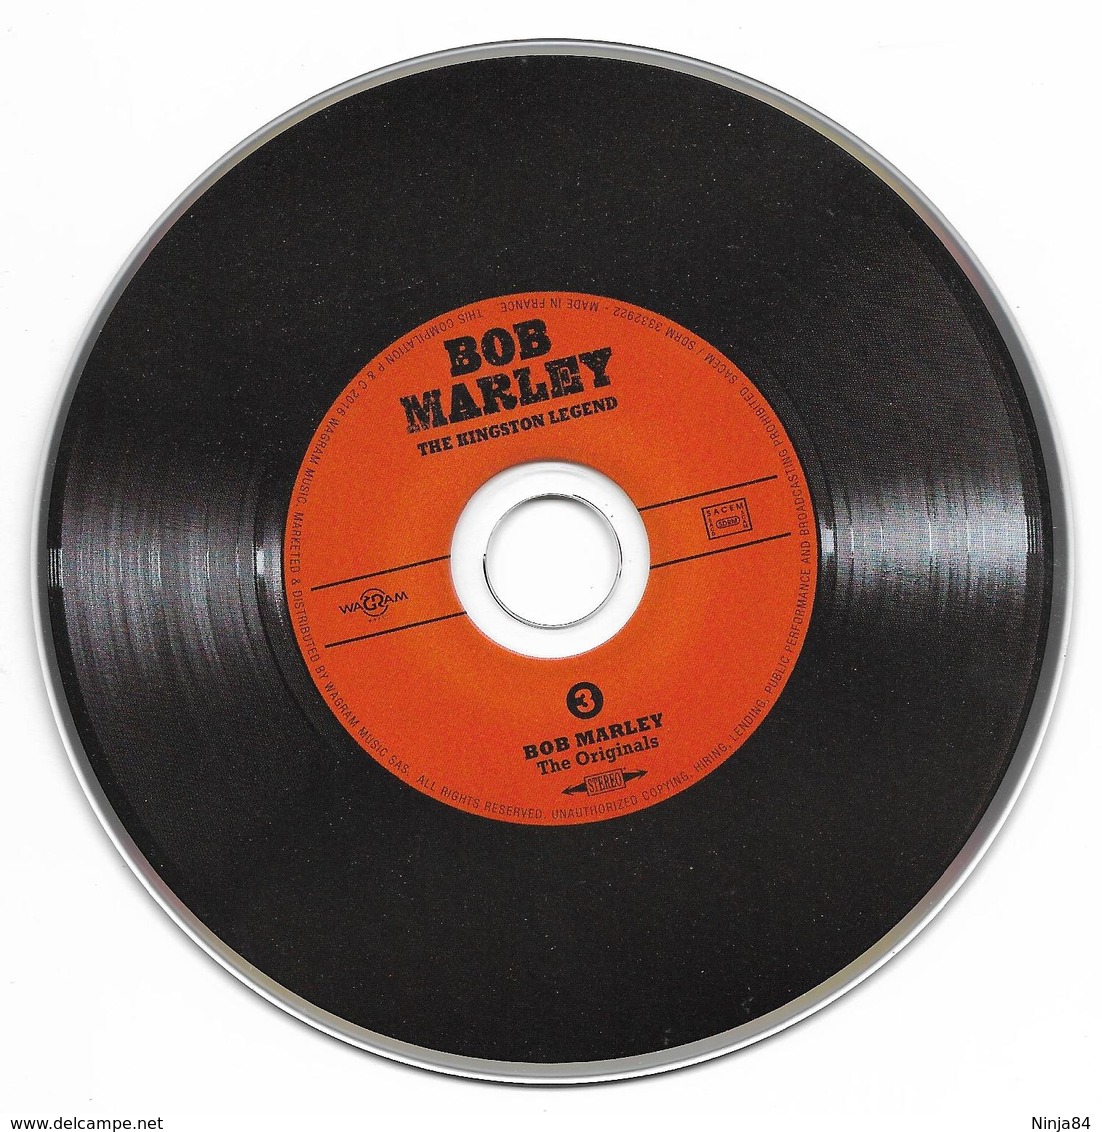 5 CD  Bob Marley   "  The kingston legend  "